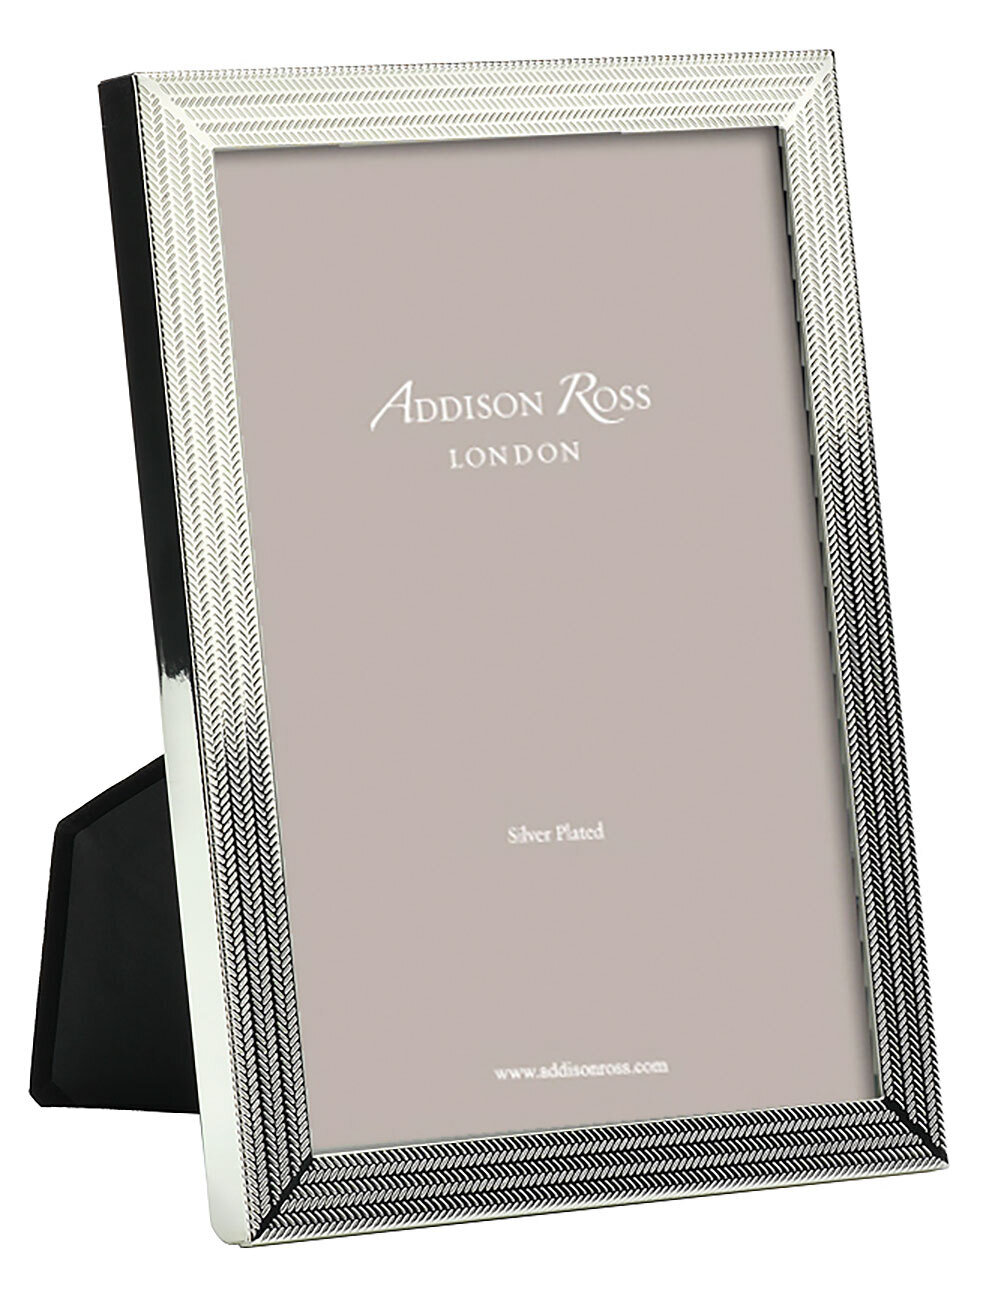 Addison Ross Herringbone Photo Frame 8 x 10 Inch Silver-plated FR0722